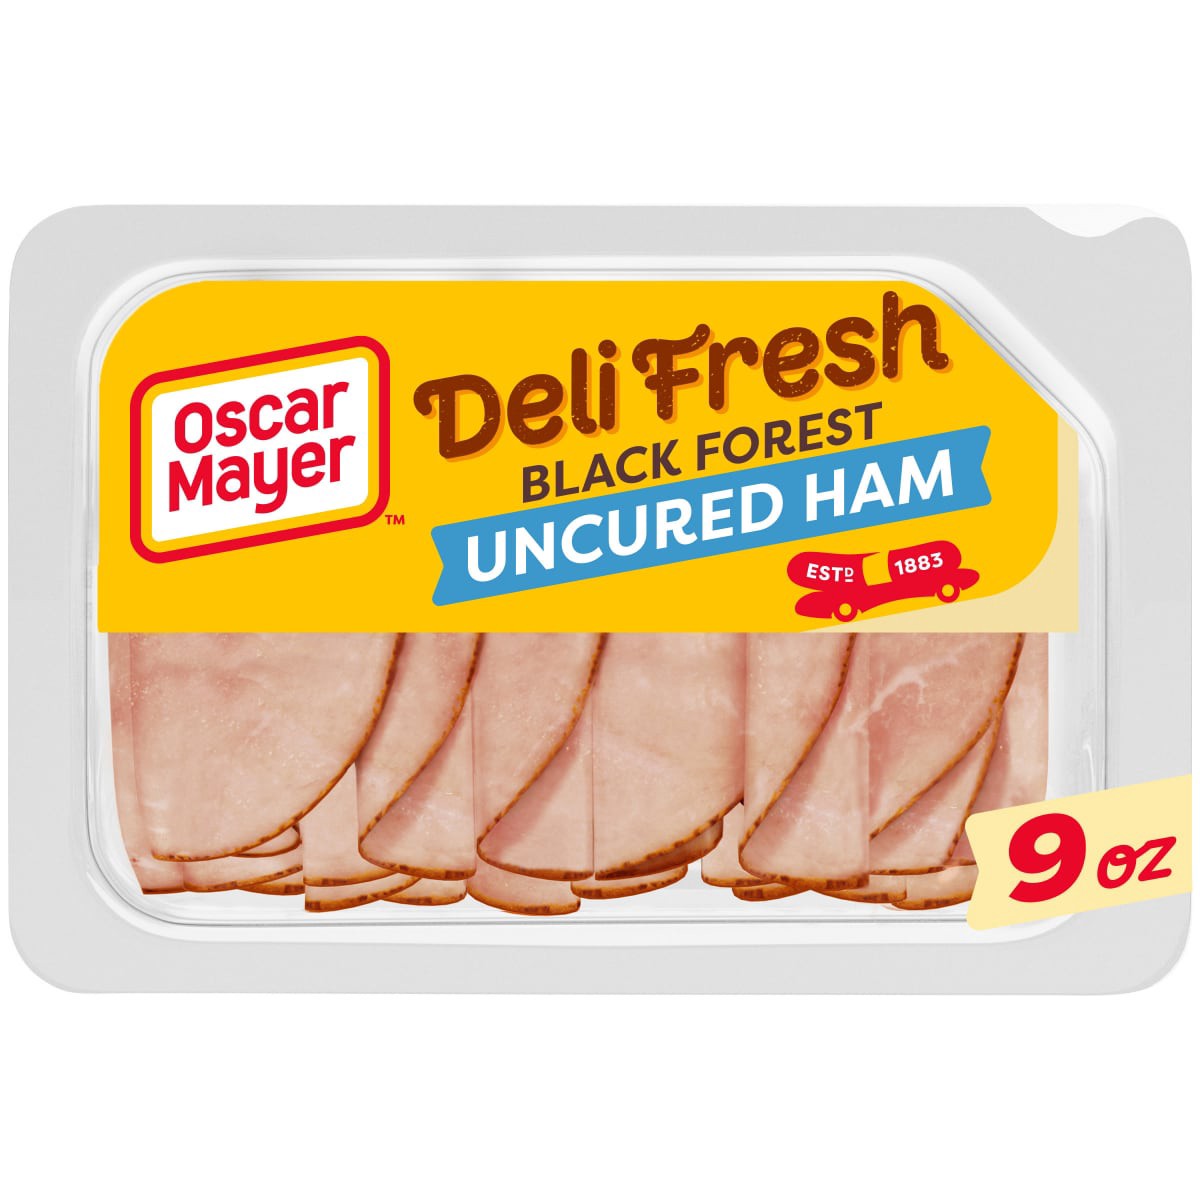 slide 1 of 29, Oscar Mayer Deli Fresh Black Forest Uncured Ham Sliced Lunch Meat Tray, 9 oz